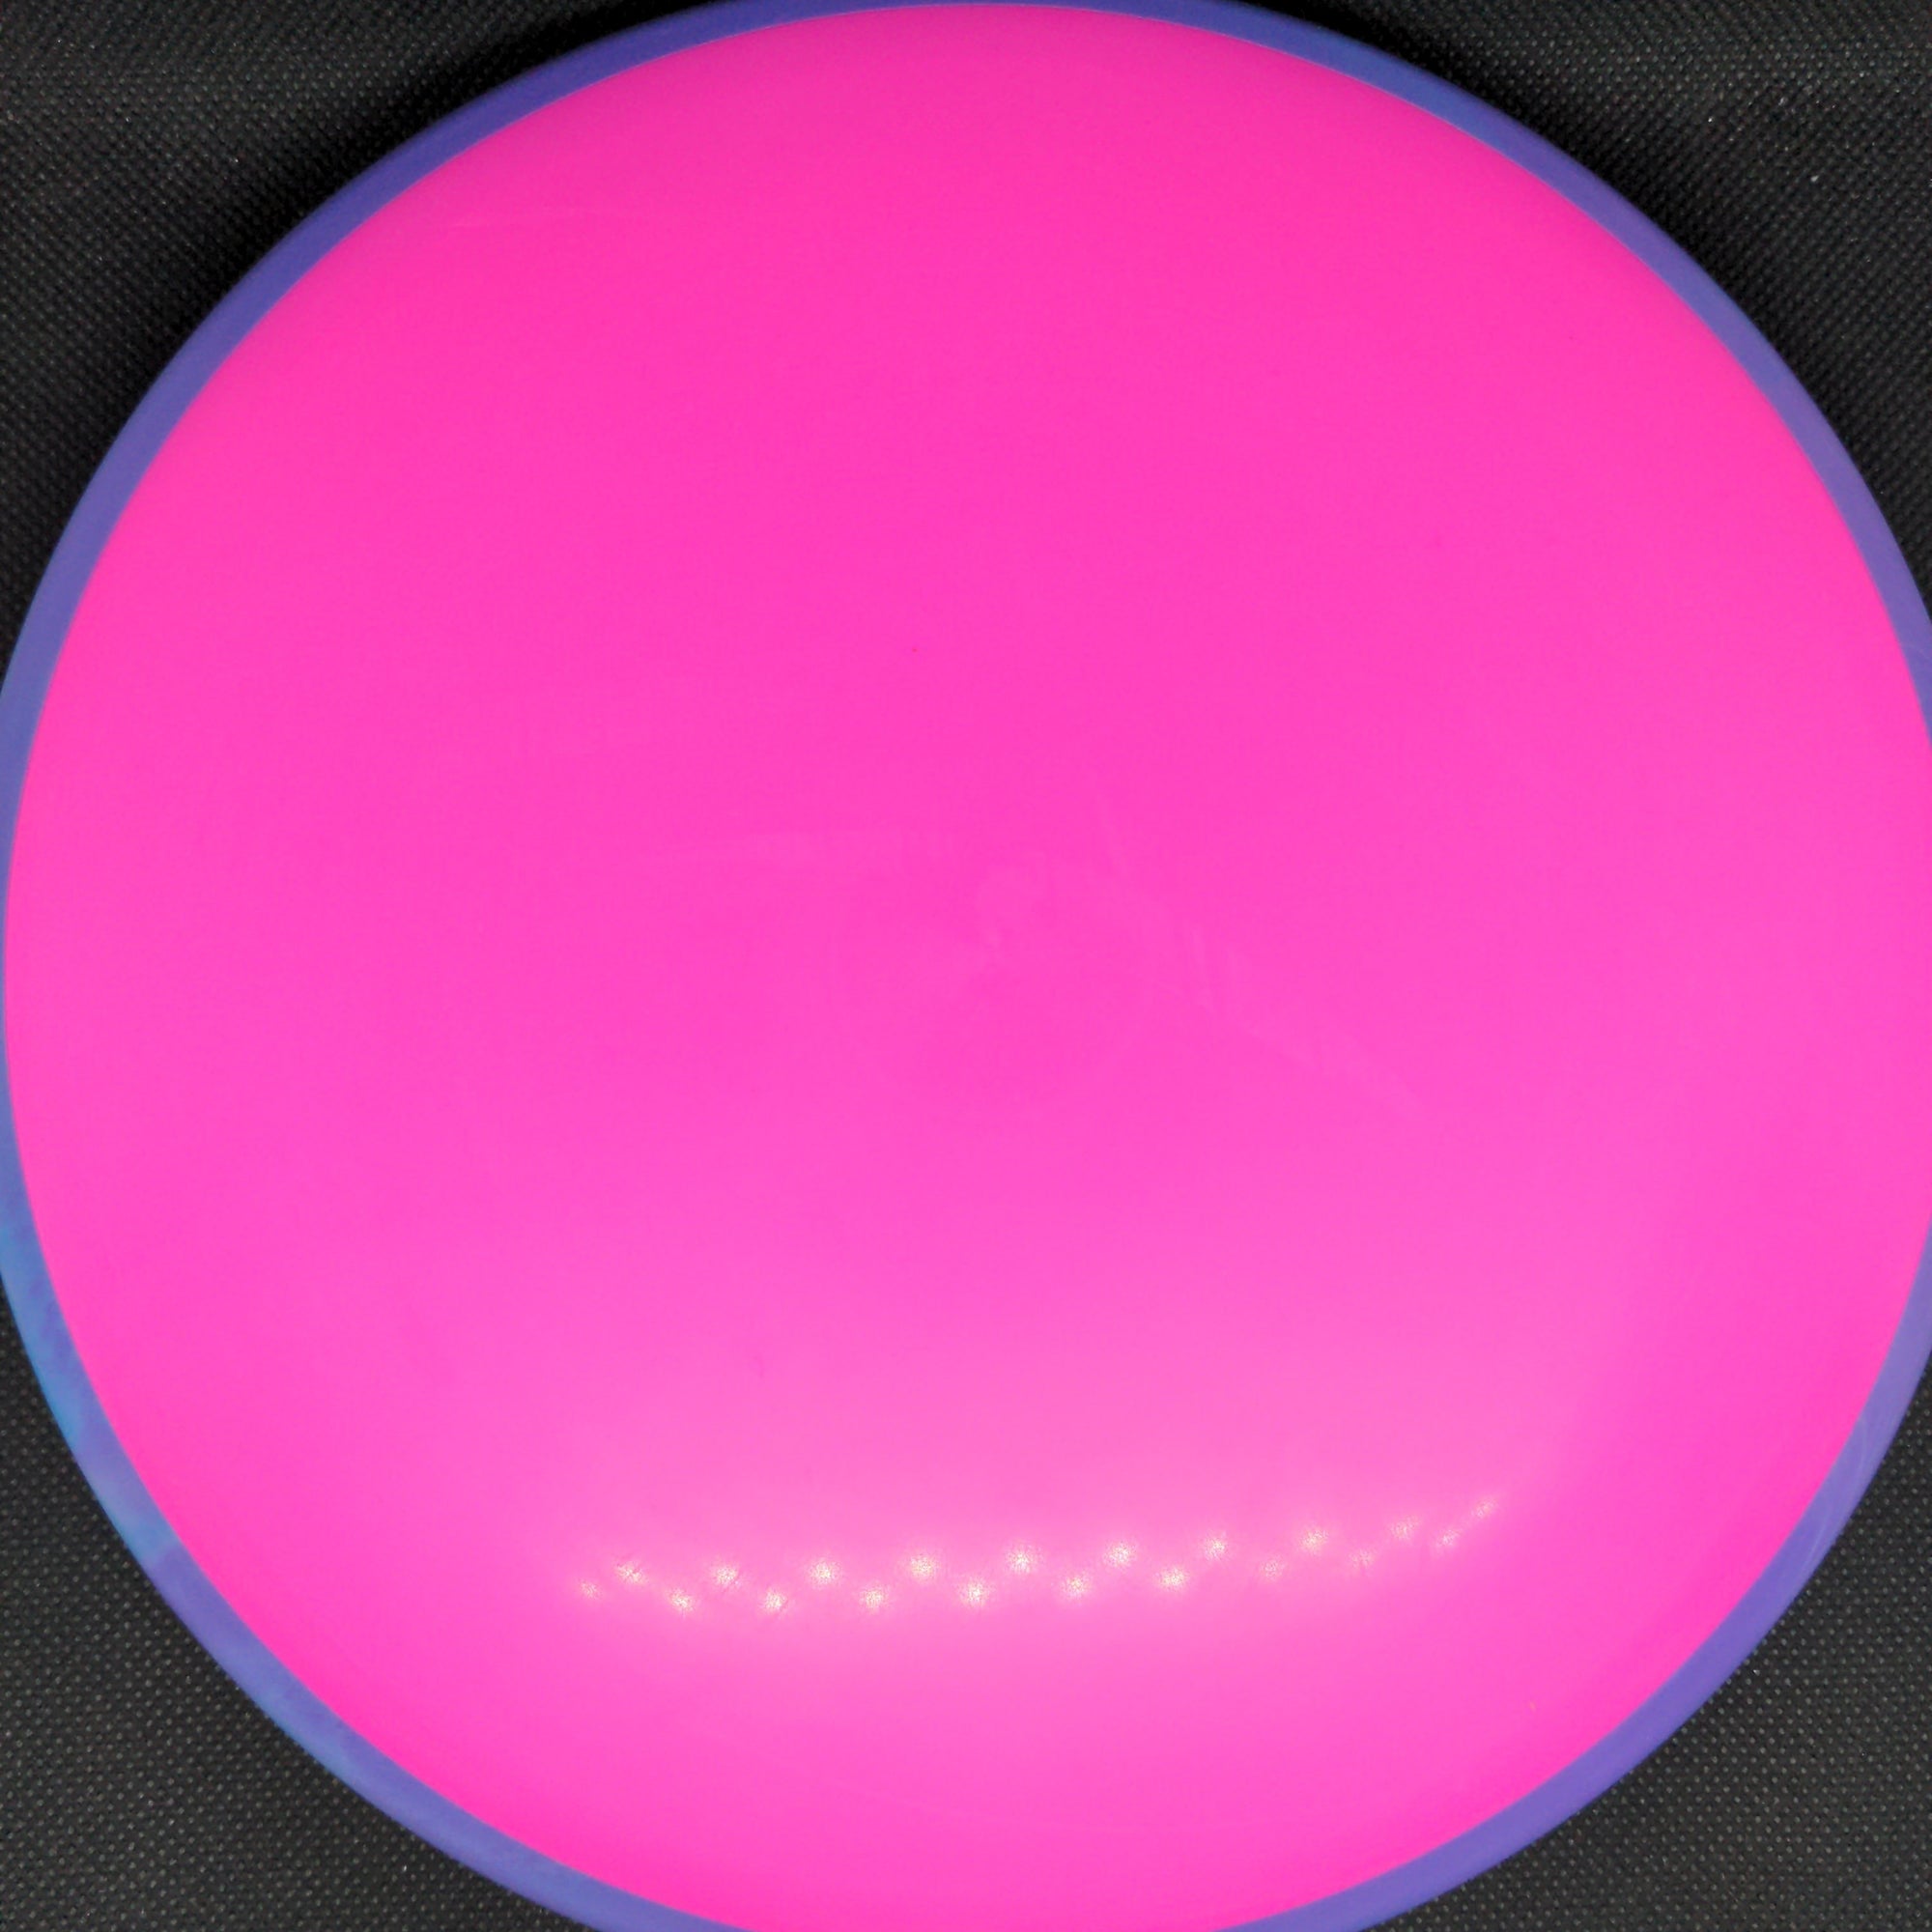 MVP Putter Pink Plate Purple Rim 174g Blank Products James Conrad Signature Envy, Electron Medium